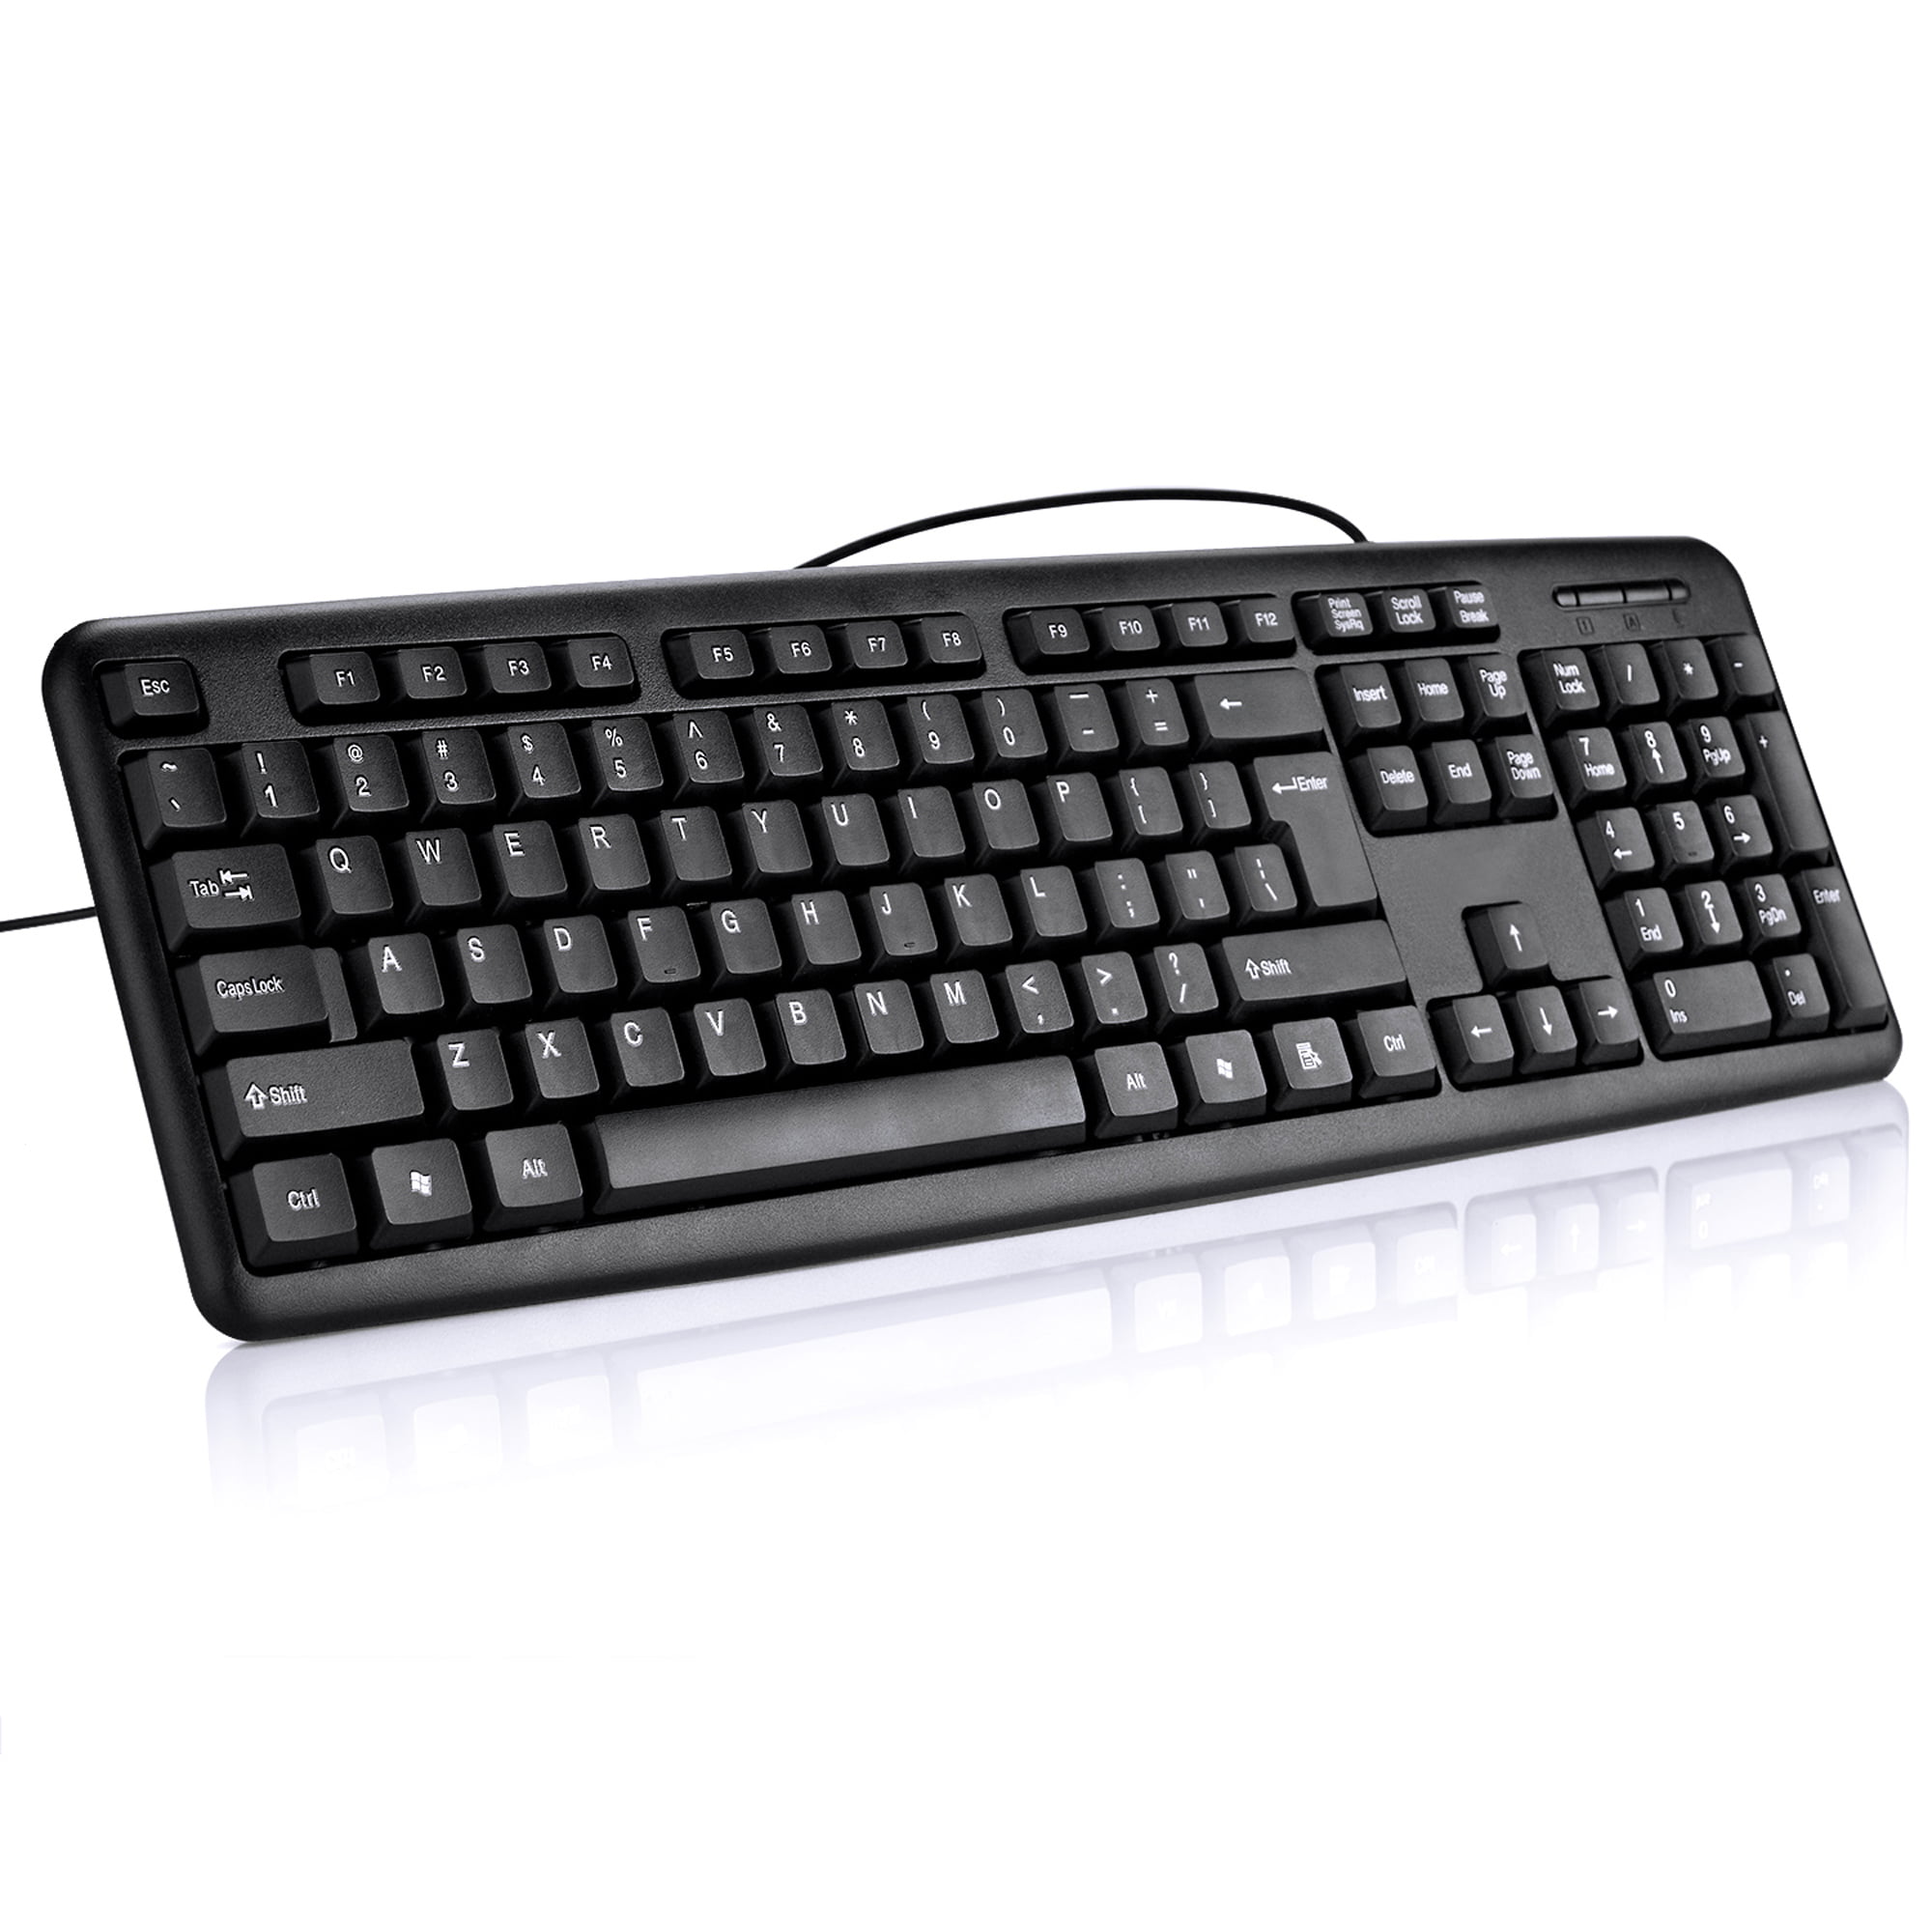 USB Wired Computer Keyboard for Windows 10 / 8 / 7 / Vista / XP (Black